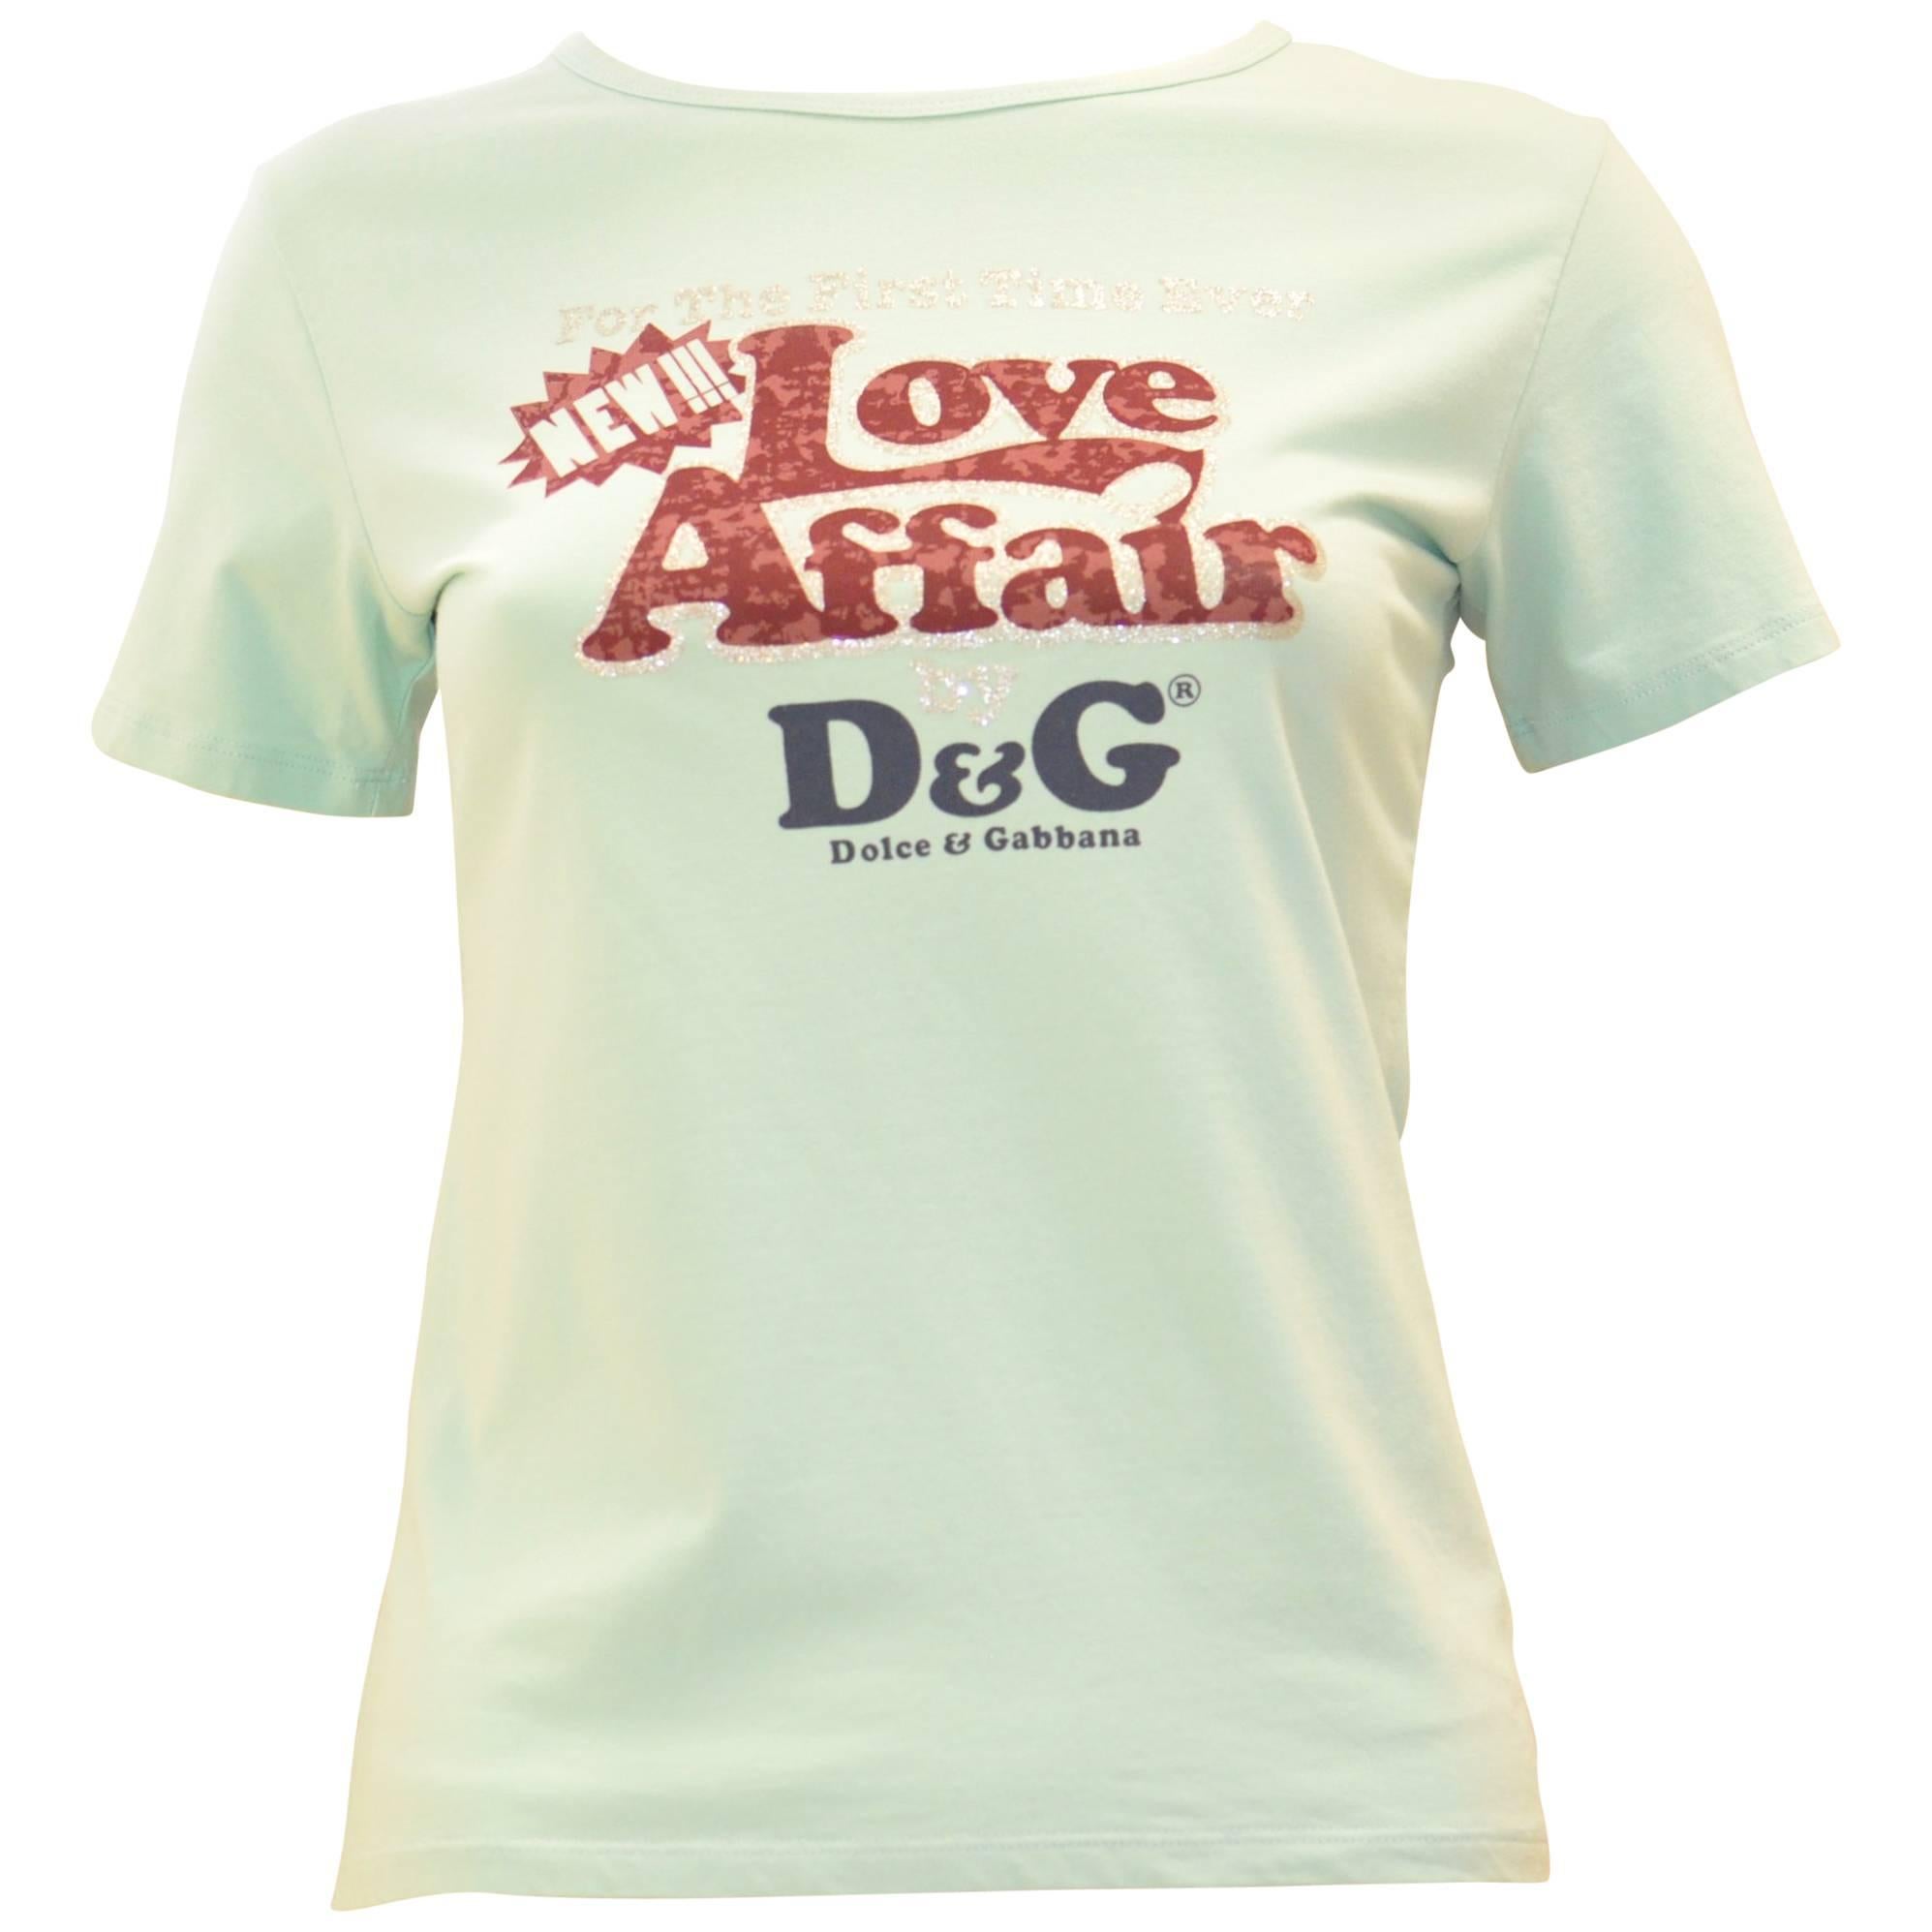 Dolce & Gabbana "Love Affair" T-Shirt